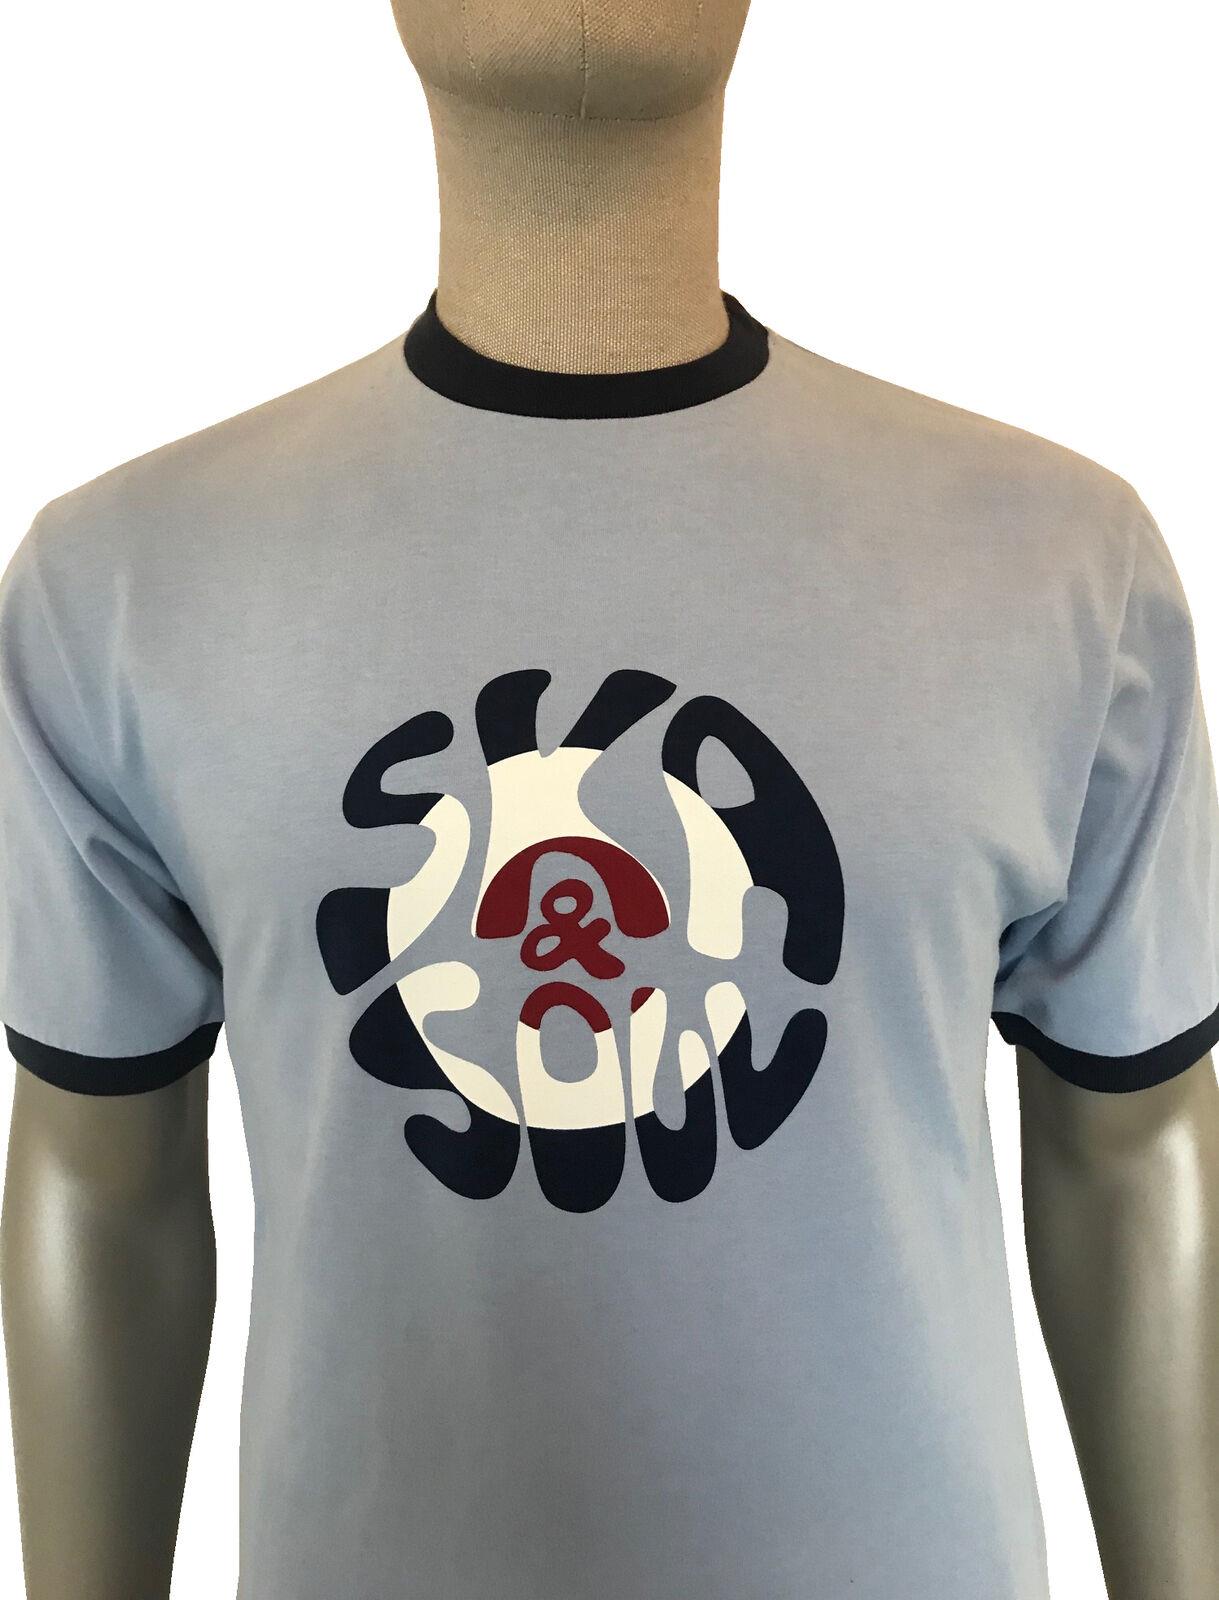 SKA & SOUL logo sky blue cotton Union flag ringer Tee T-shirt